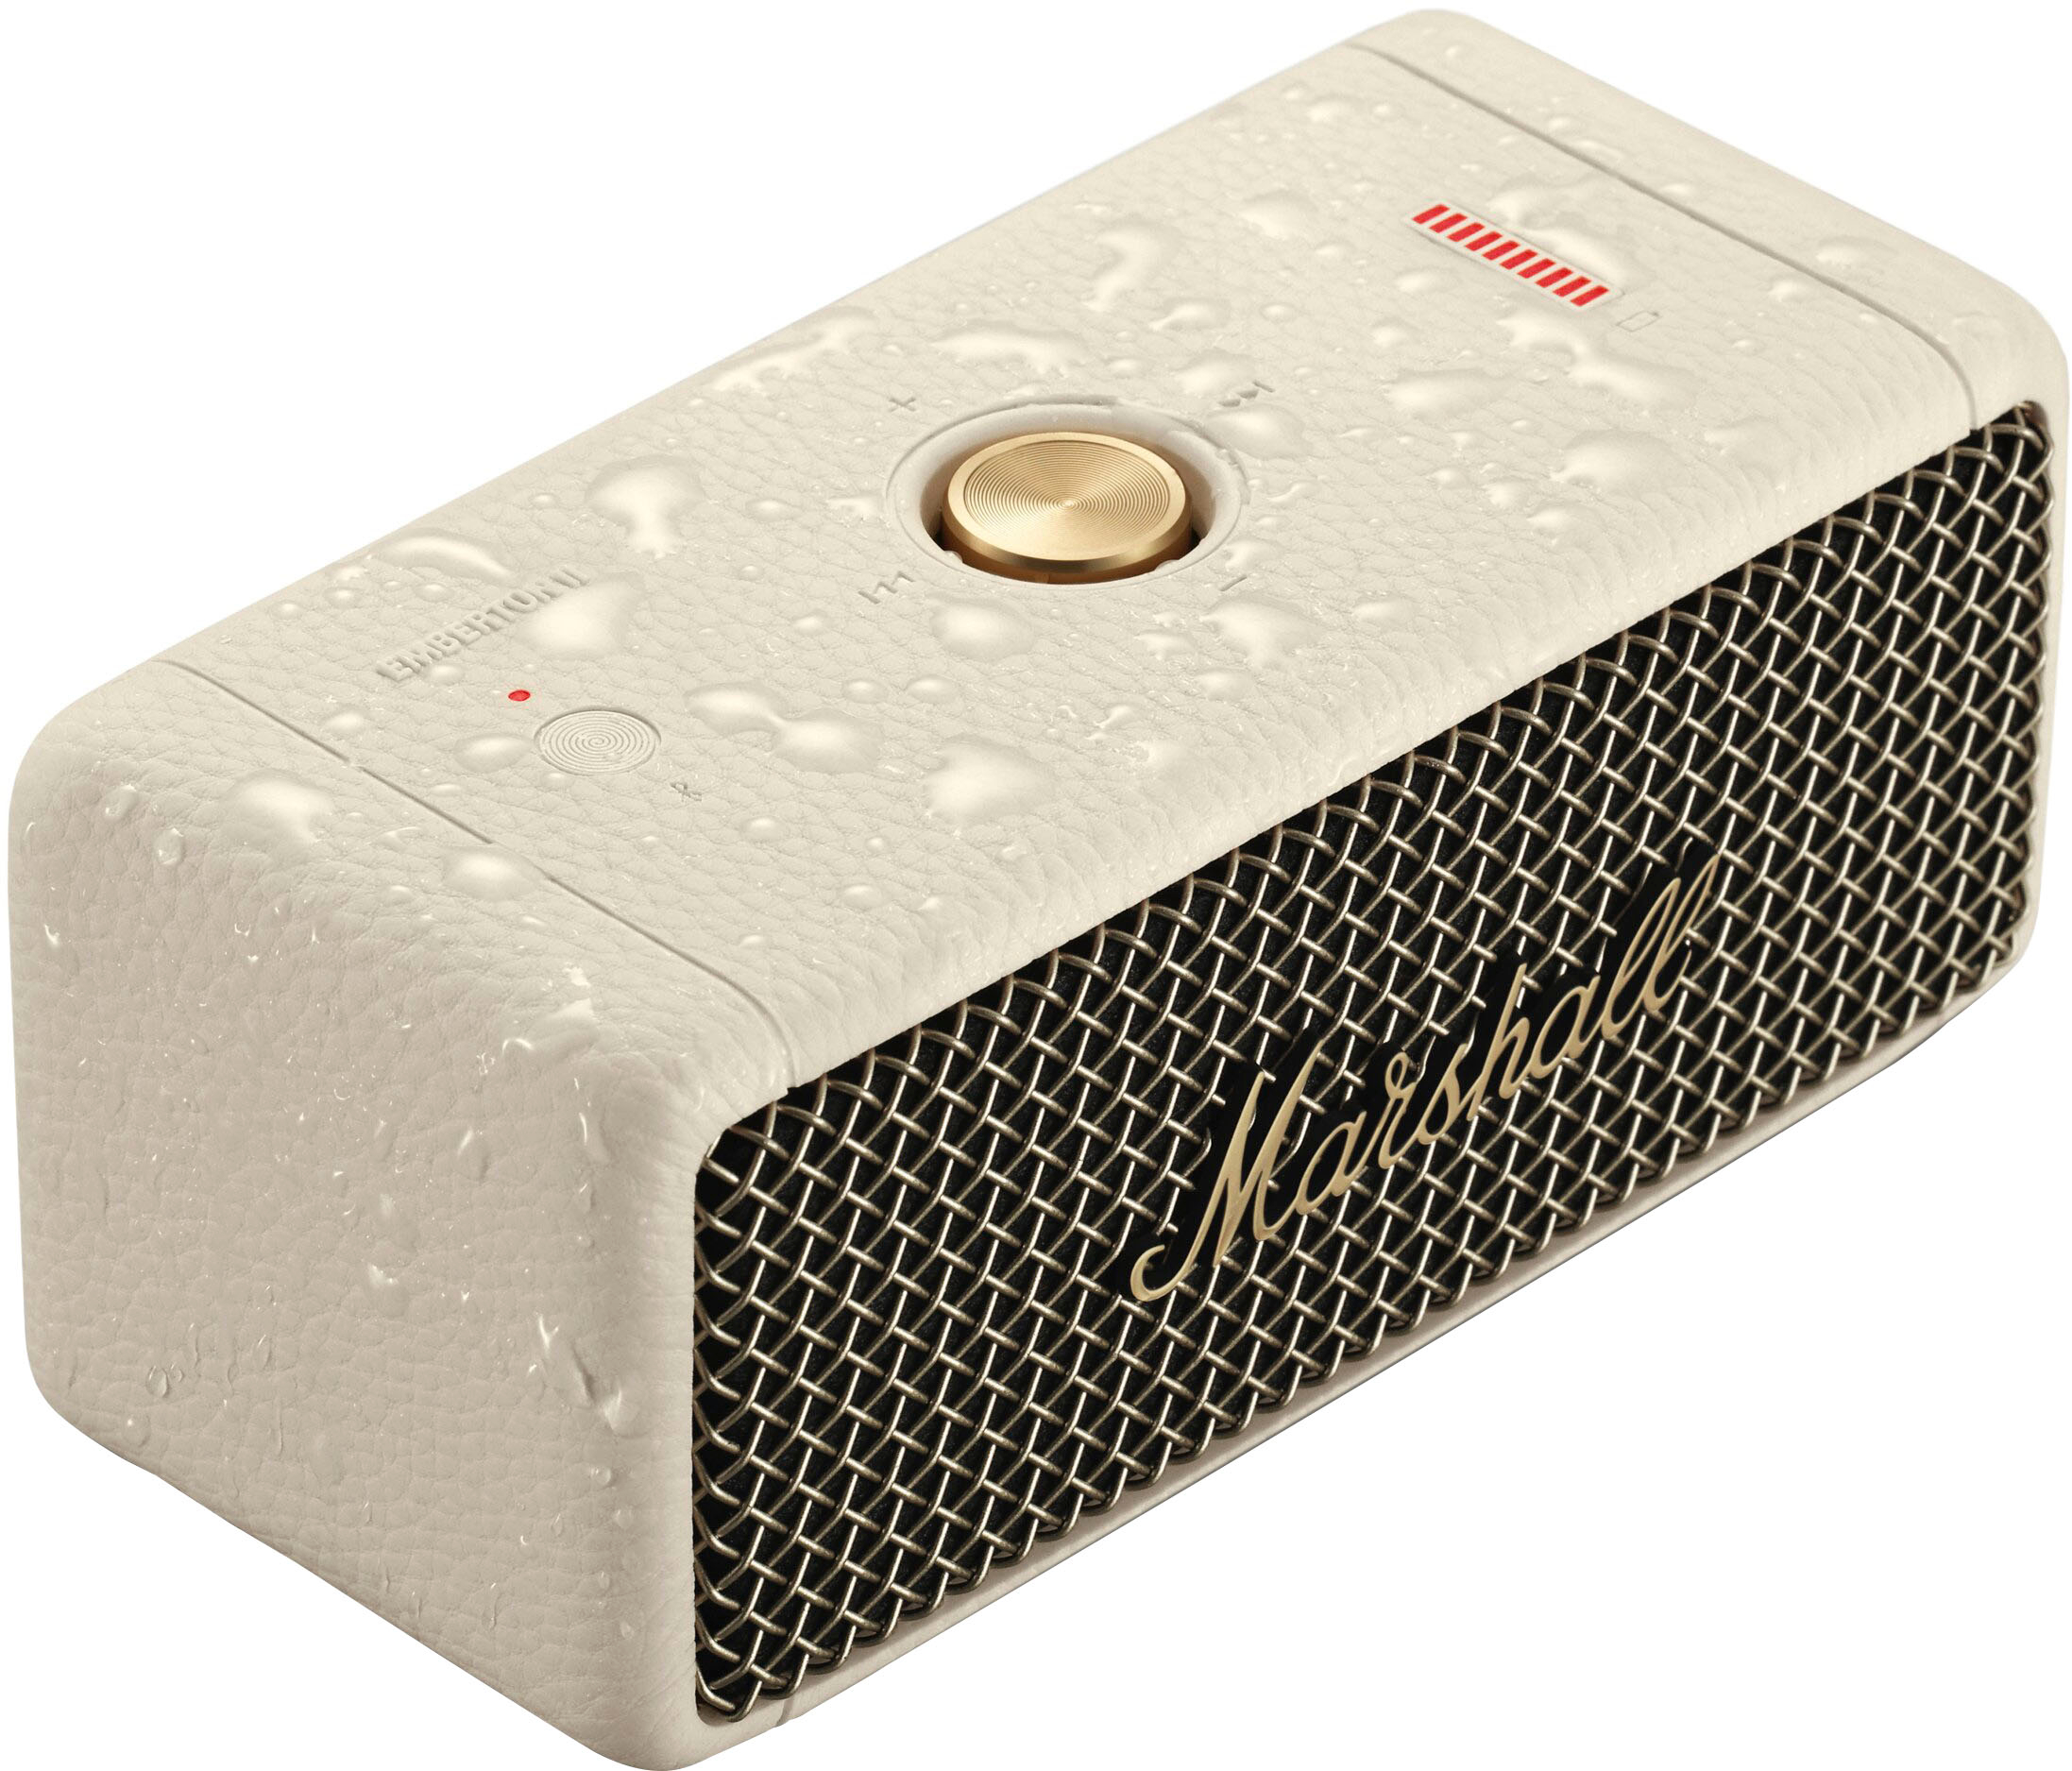 Marshall Emberton Portable Bluetooth Speaker (Cream) Price in